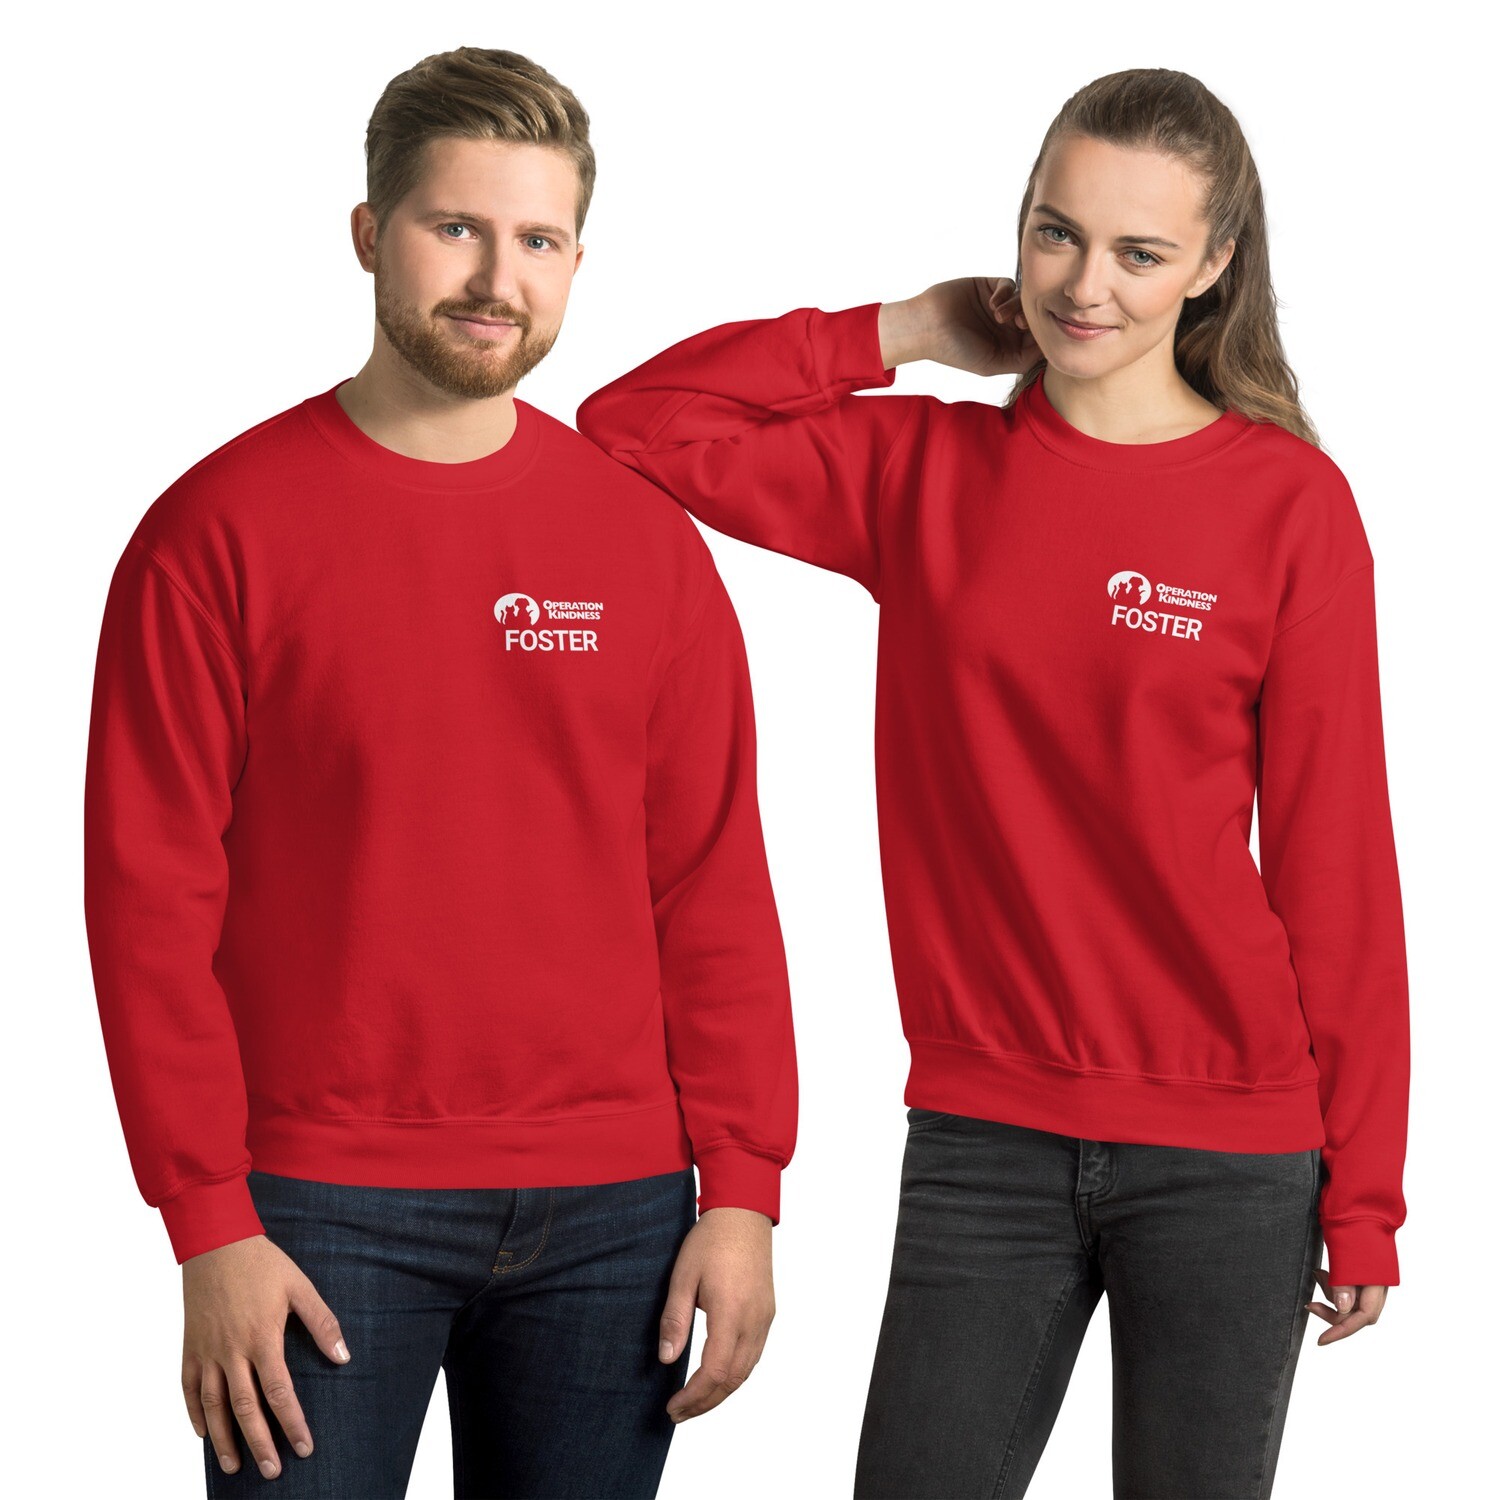 Foster unisex sweatshirt